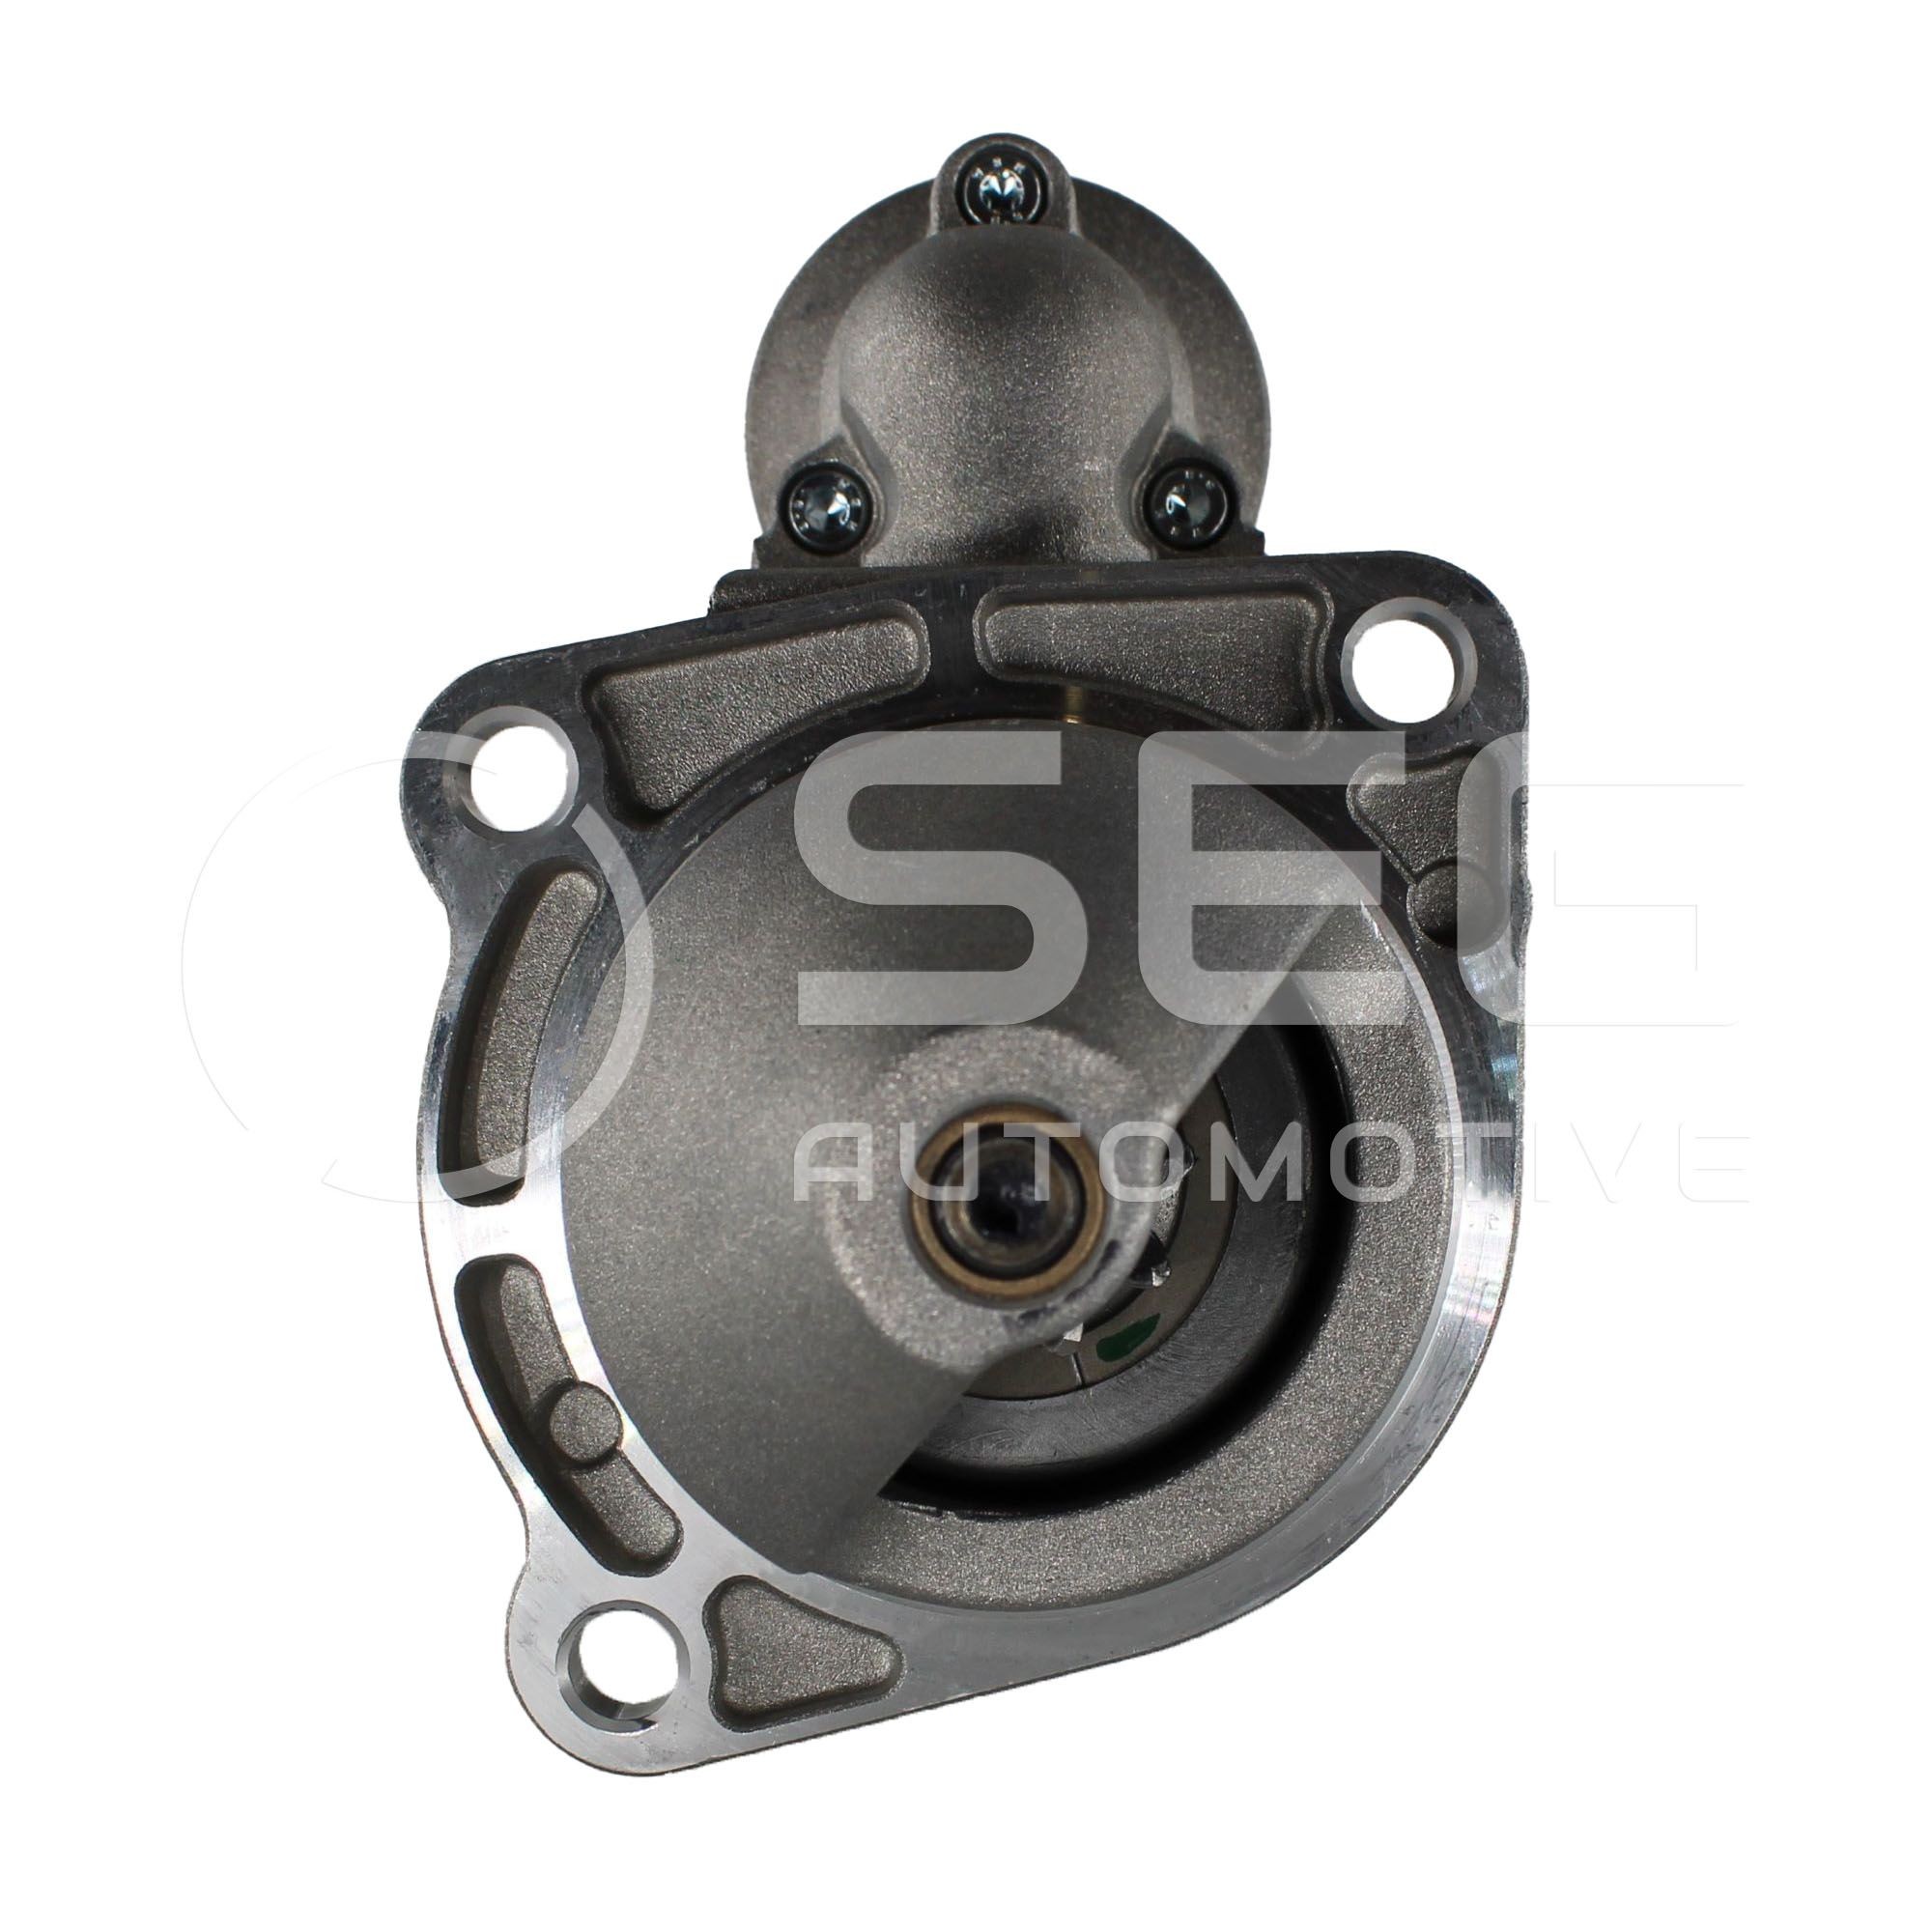 SEG Automotive 0001262002 Starter motor 090015728